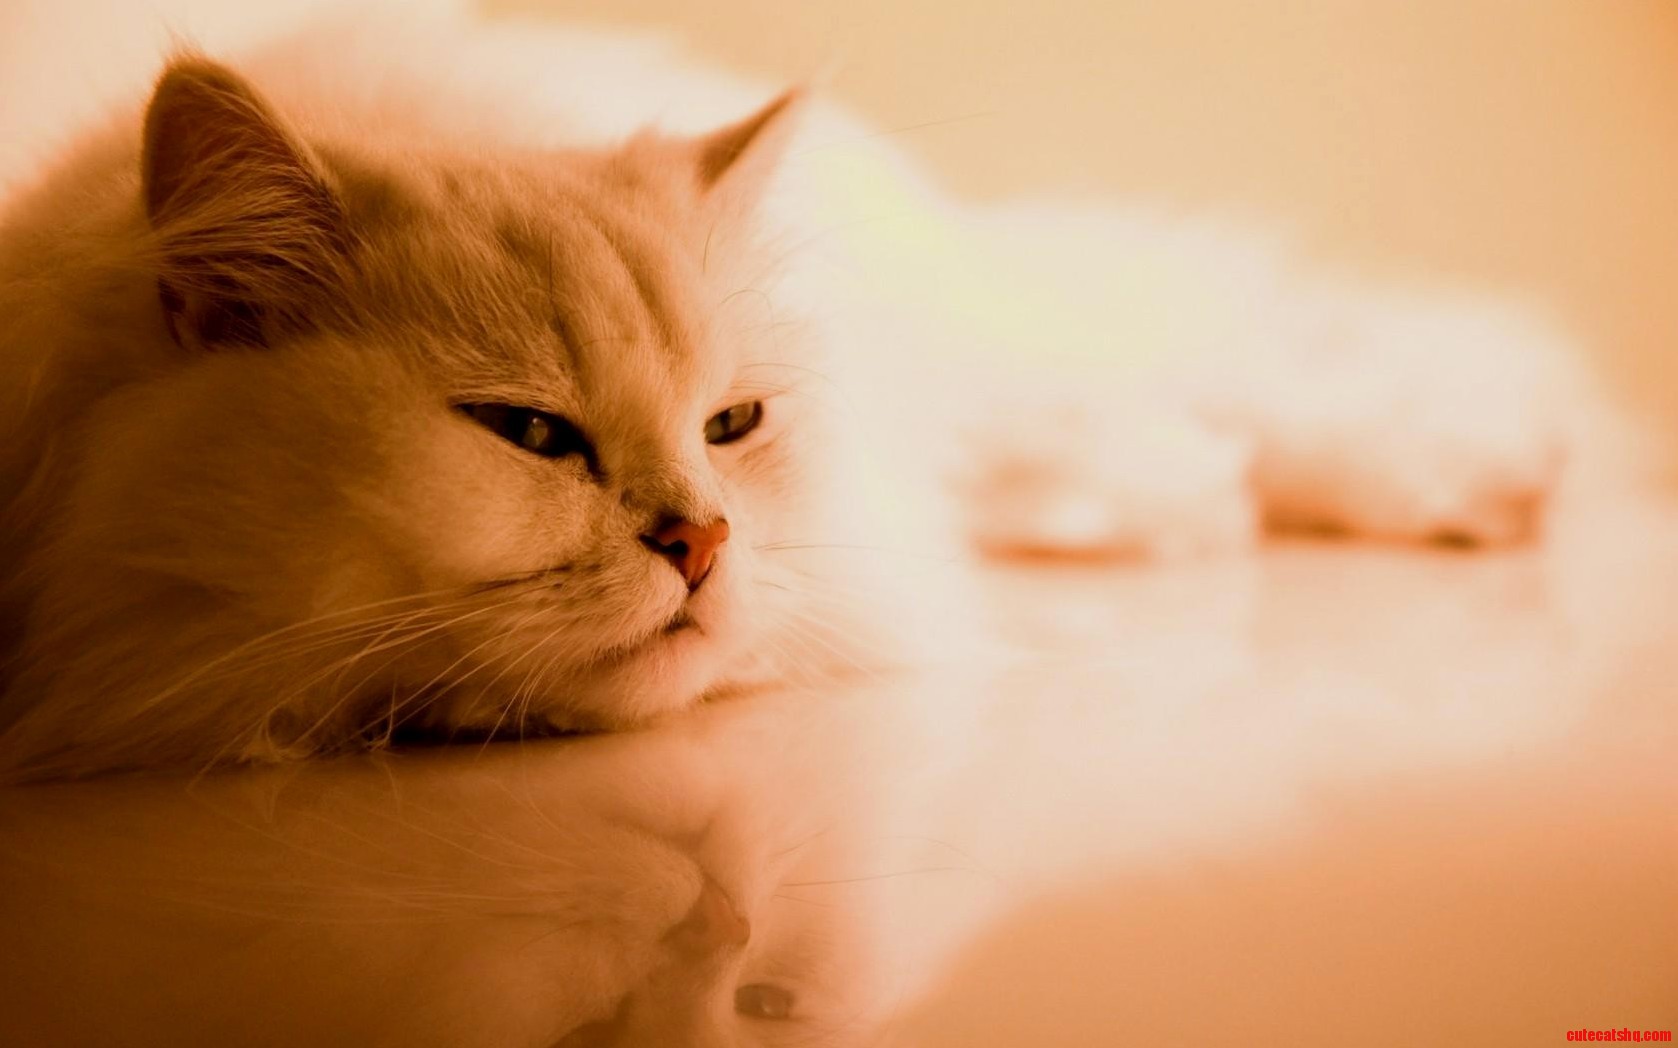 Cute fluffy cat tumblr